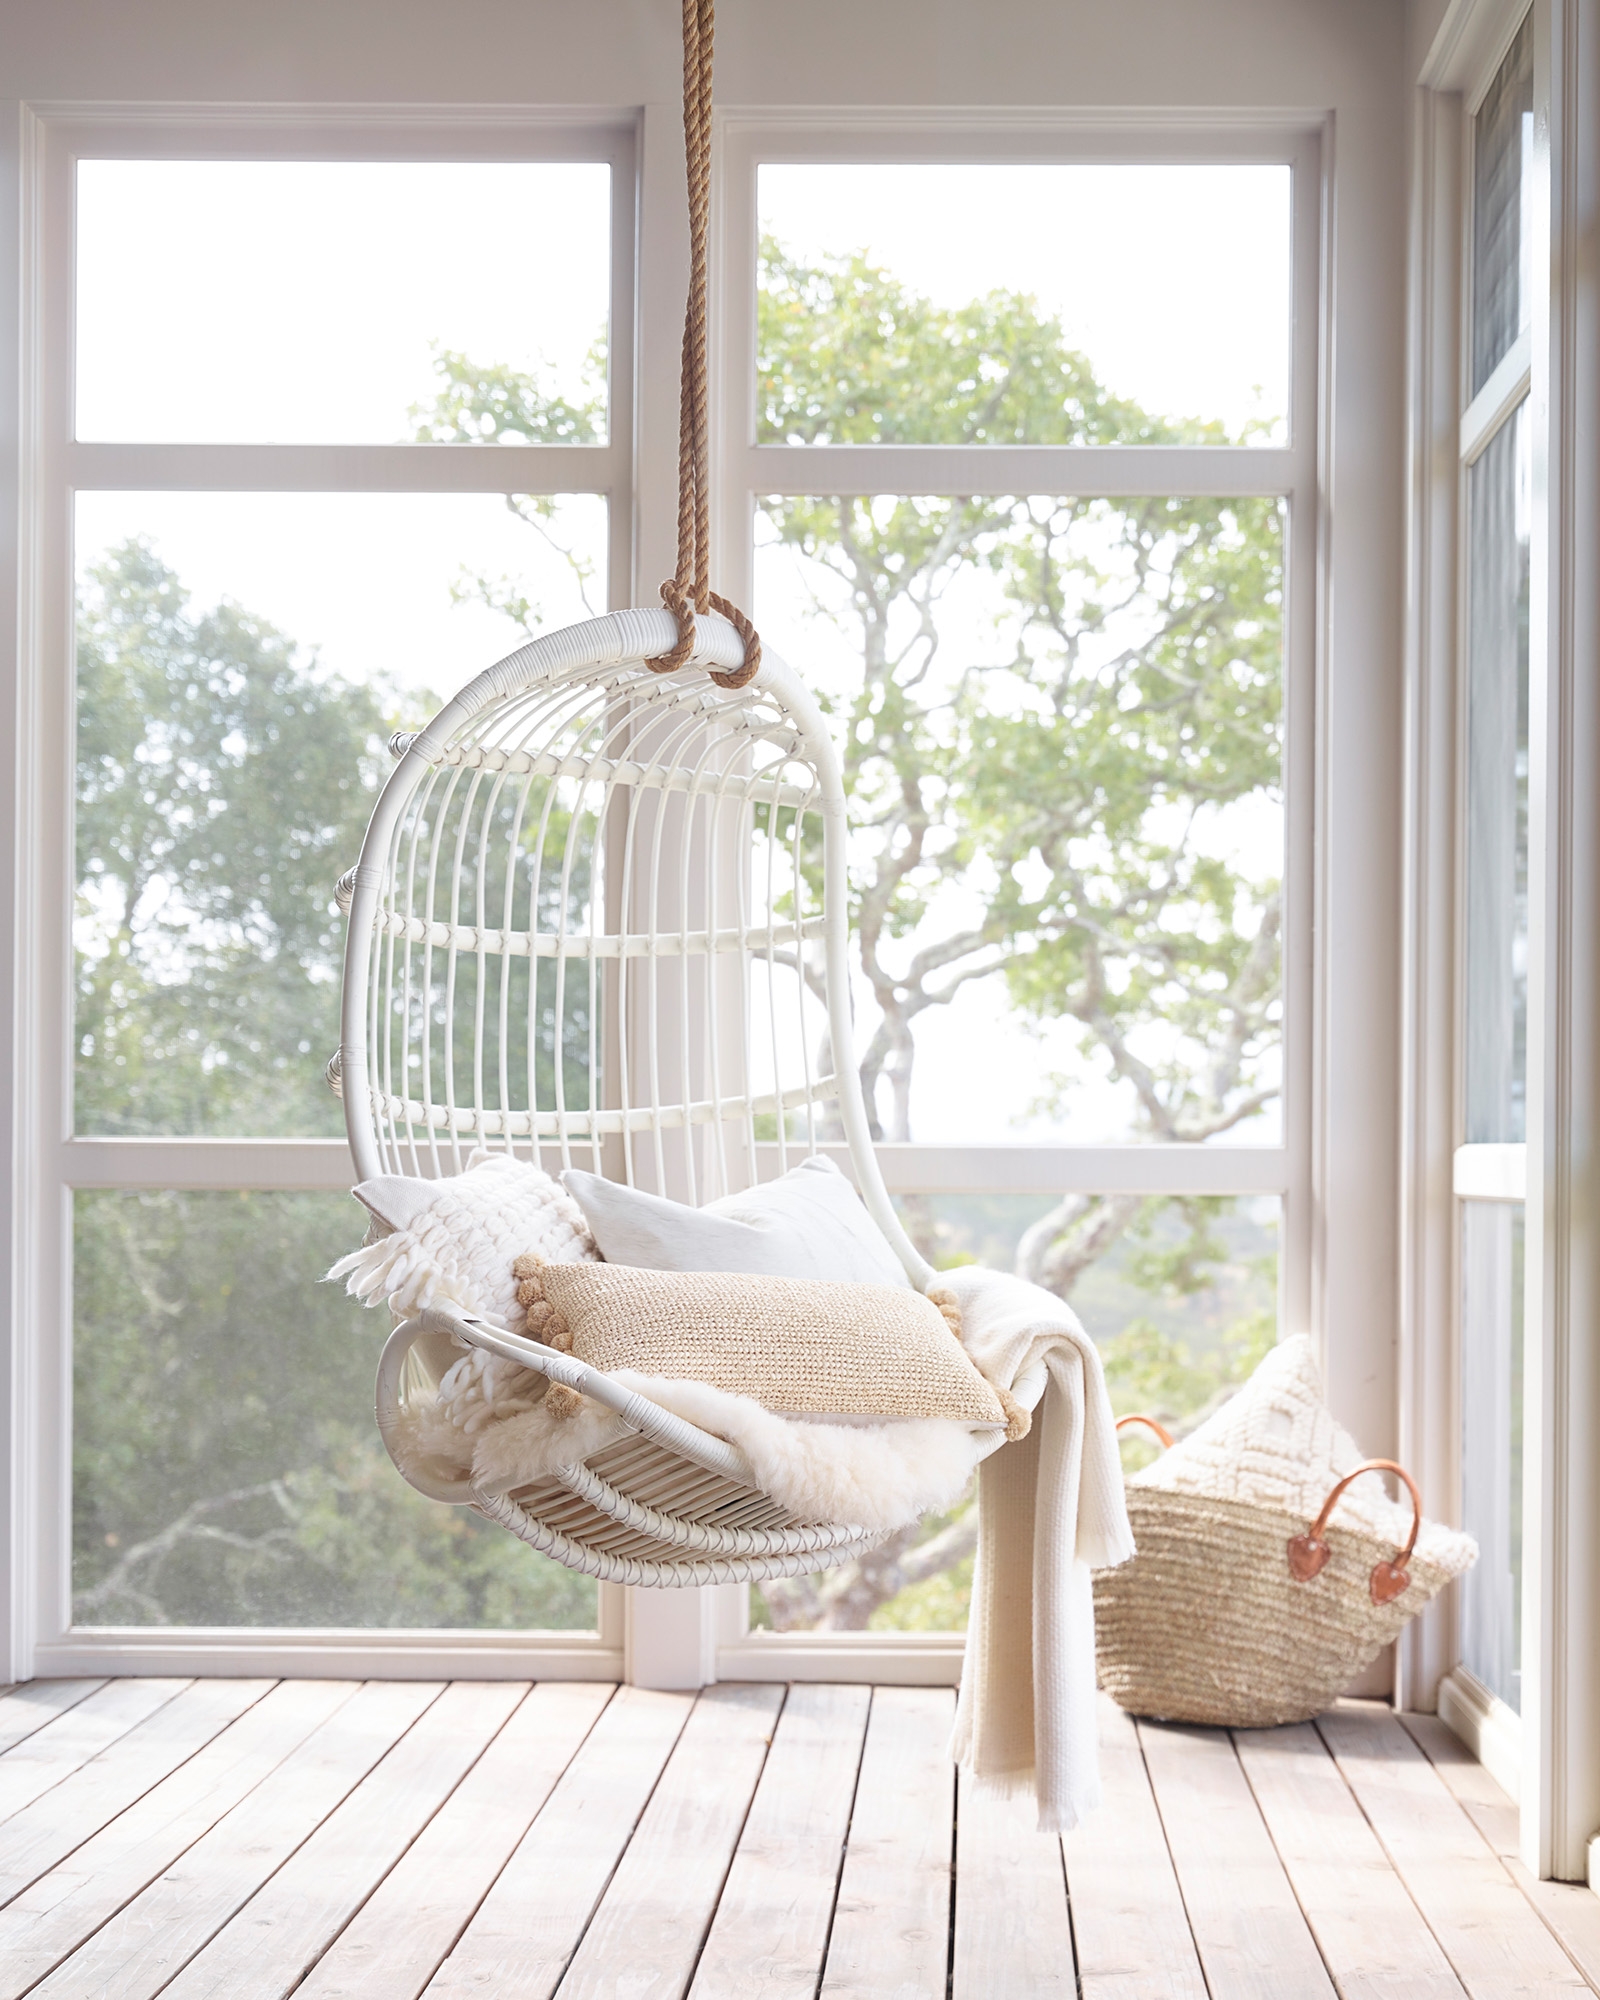 Hanging Rattan Chair - White - Image 1